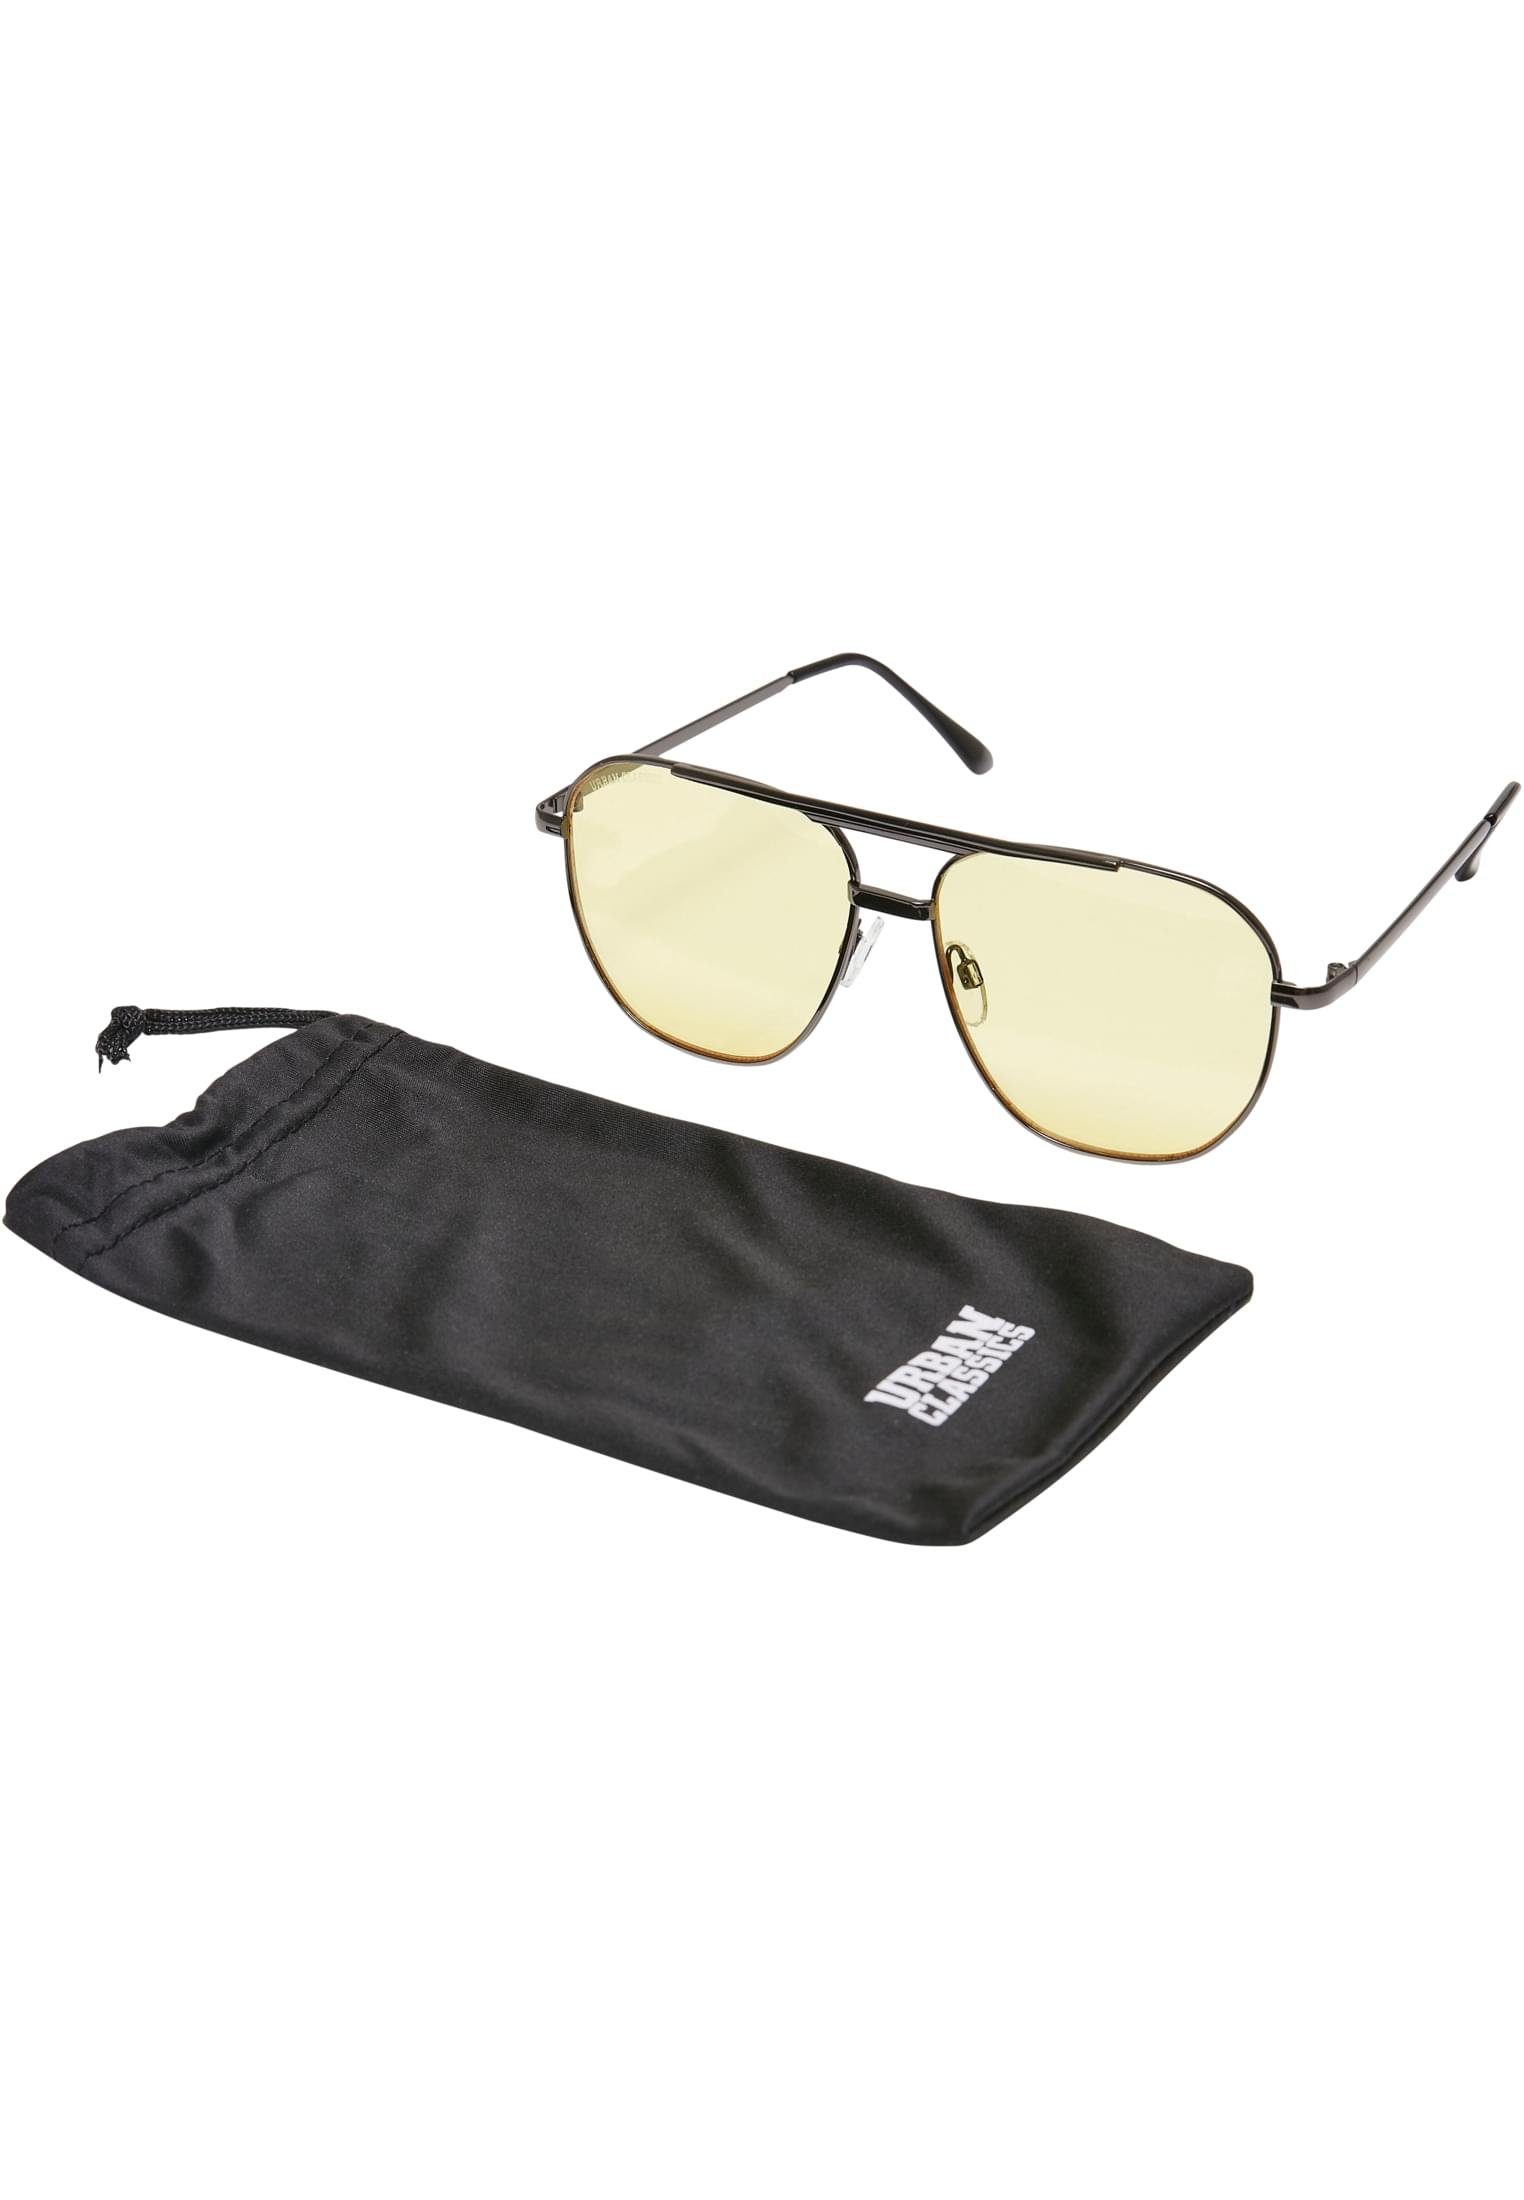 URBAN CLASSICS Sonnenbrille Unisex Sunglasses Manila gunmetal/vintagesun | Sonnenbrillen